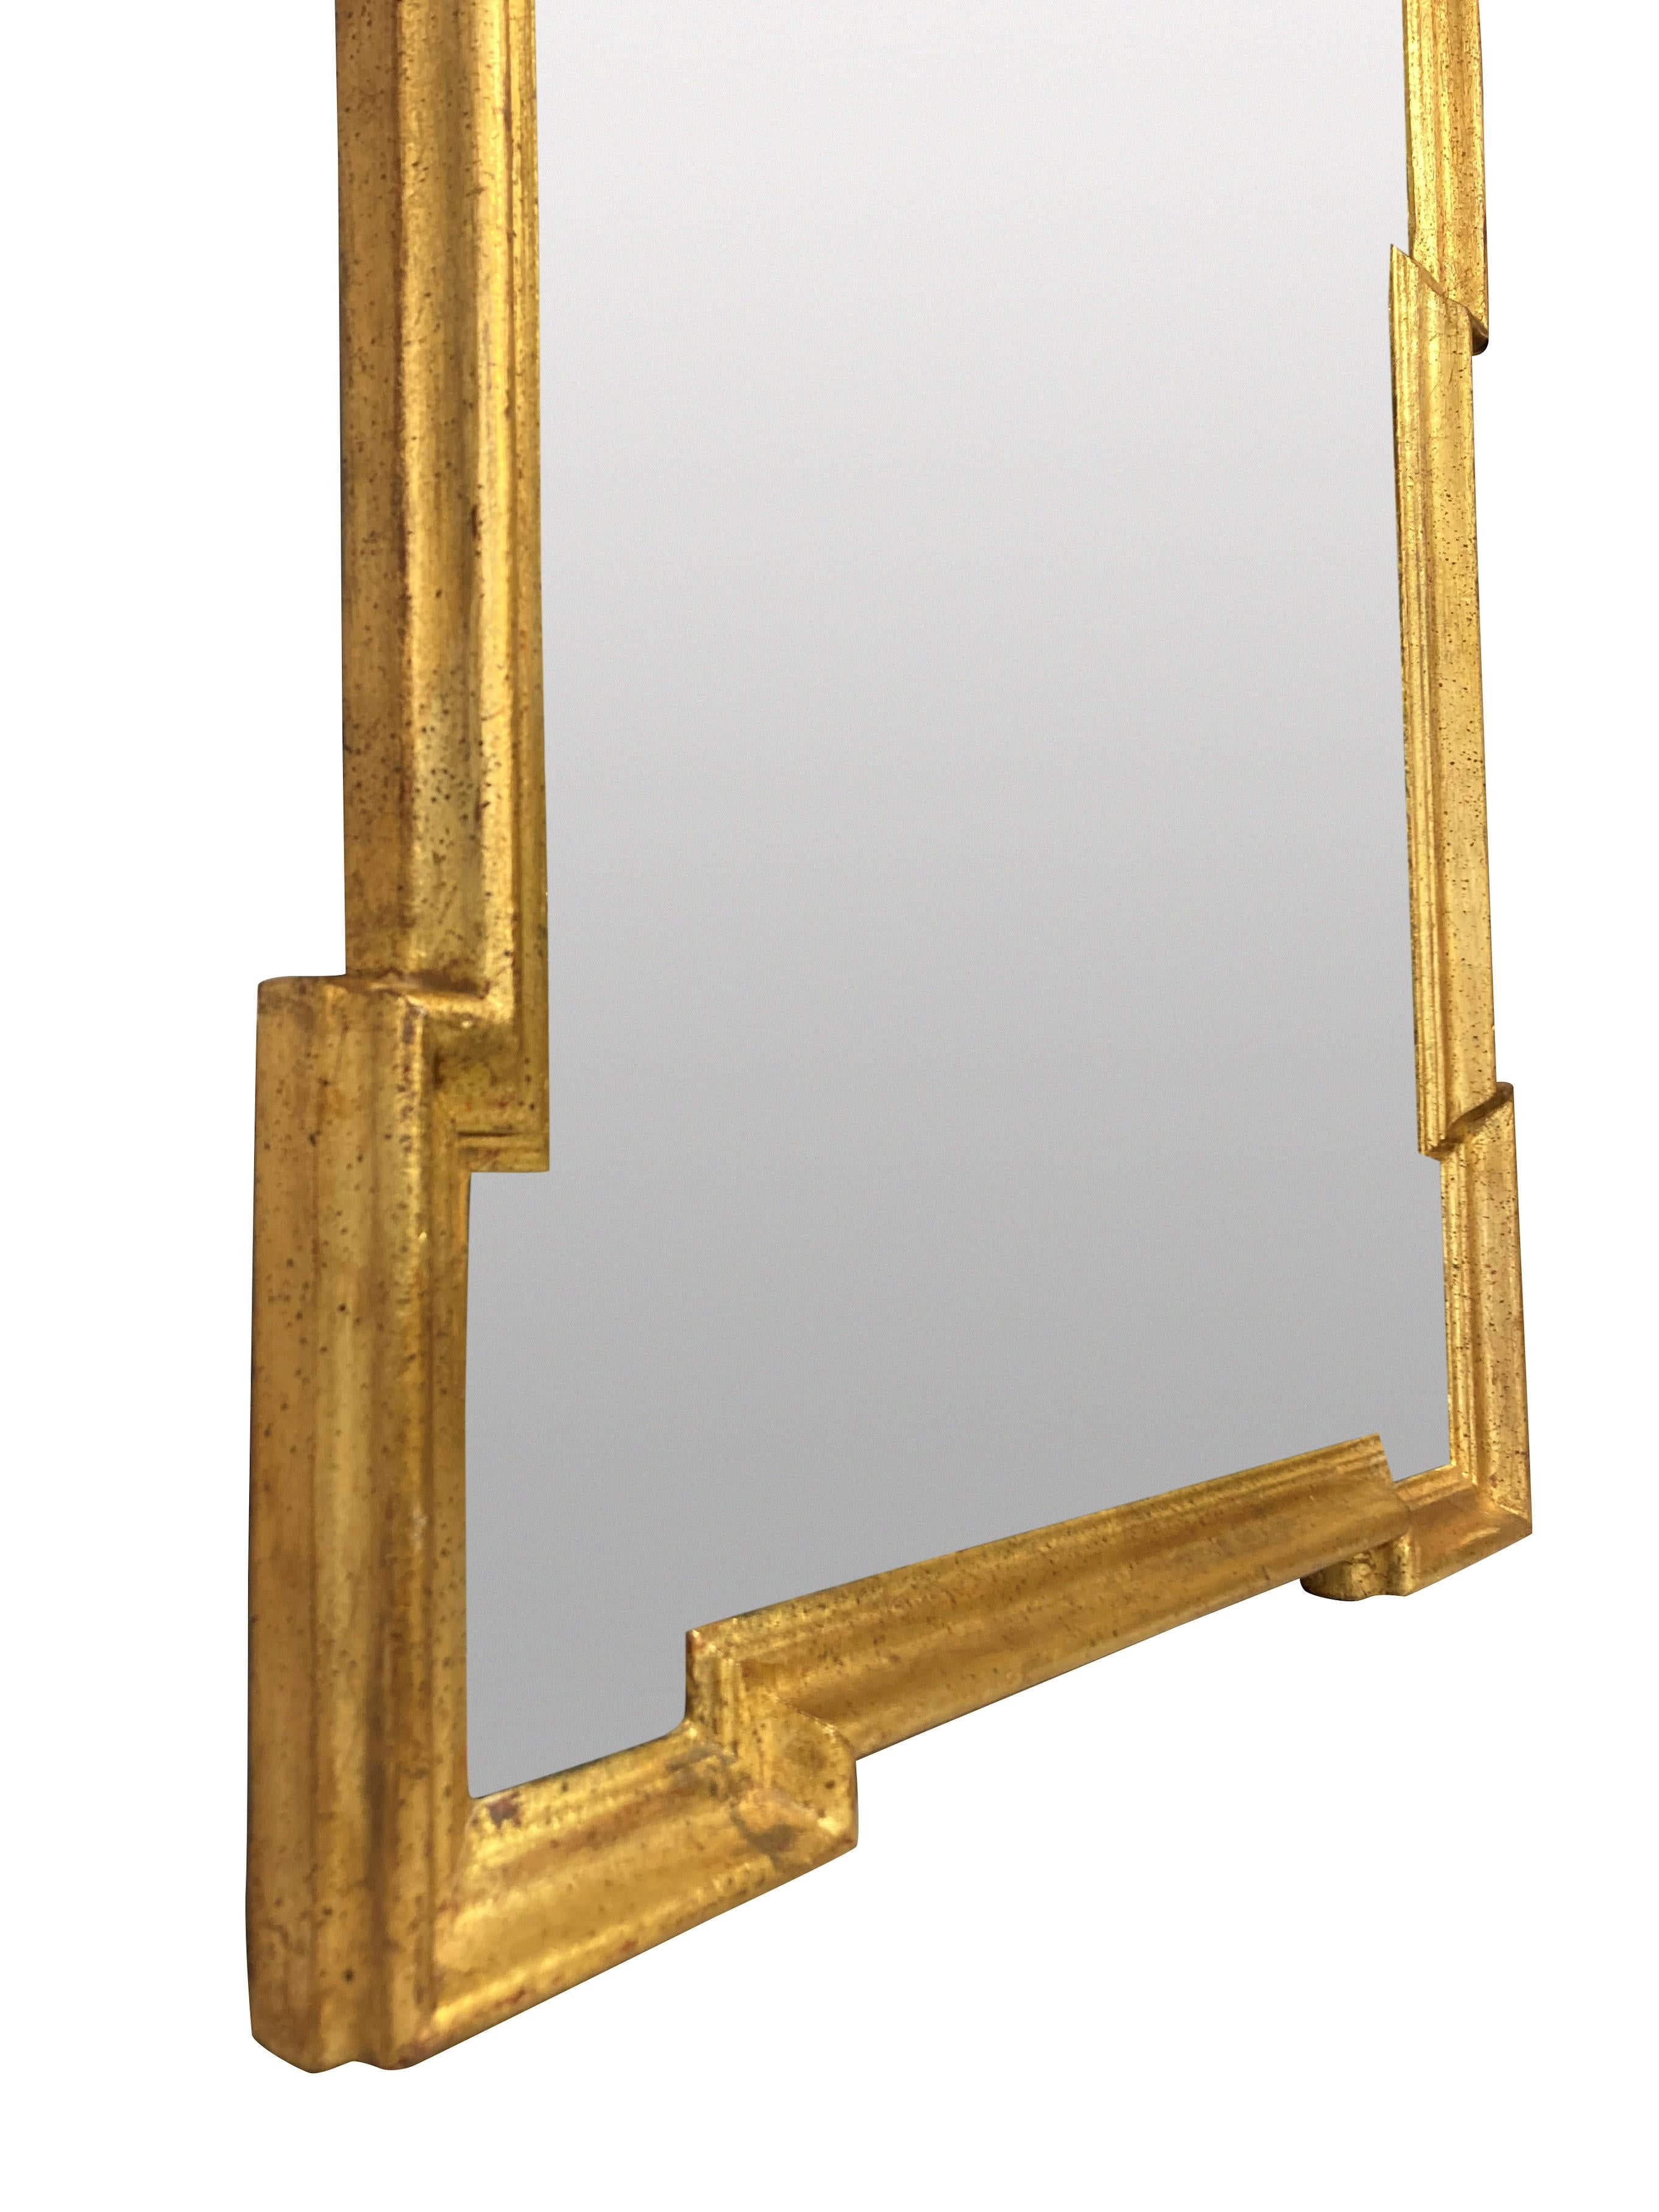 An English mid-century Queen Anne tyle gilt wood mirror.